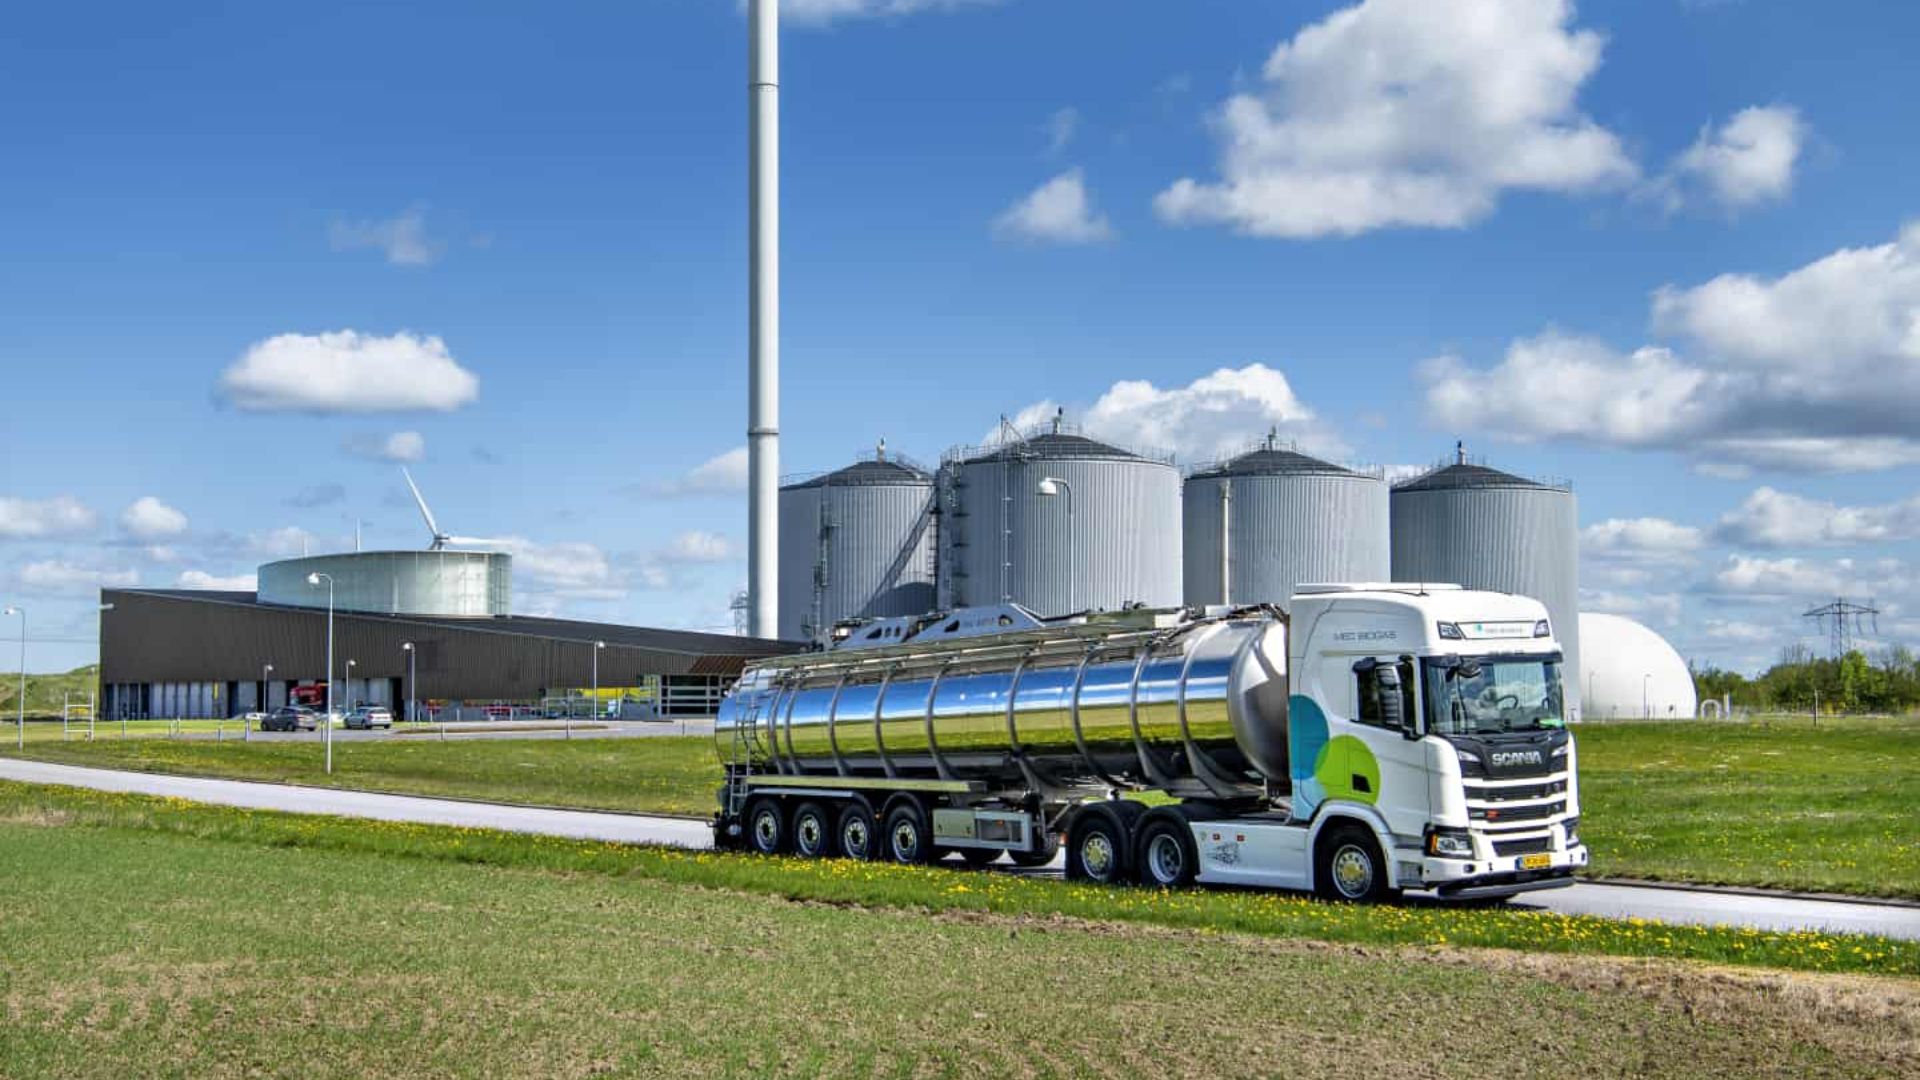 MEC-Biogas has been acquired by Måbjerg Biogas Leverandørforening and Skovgaard Energy